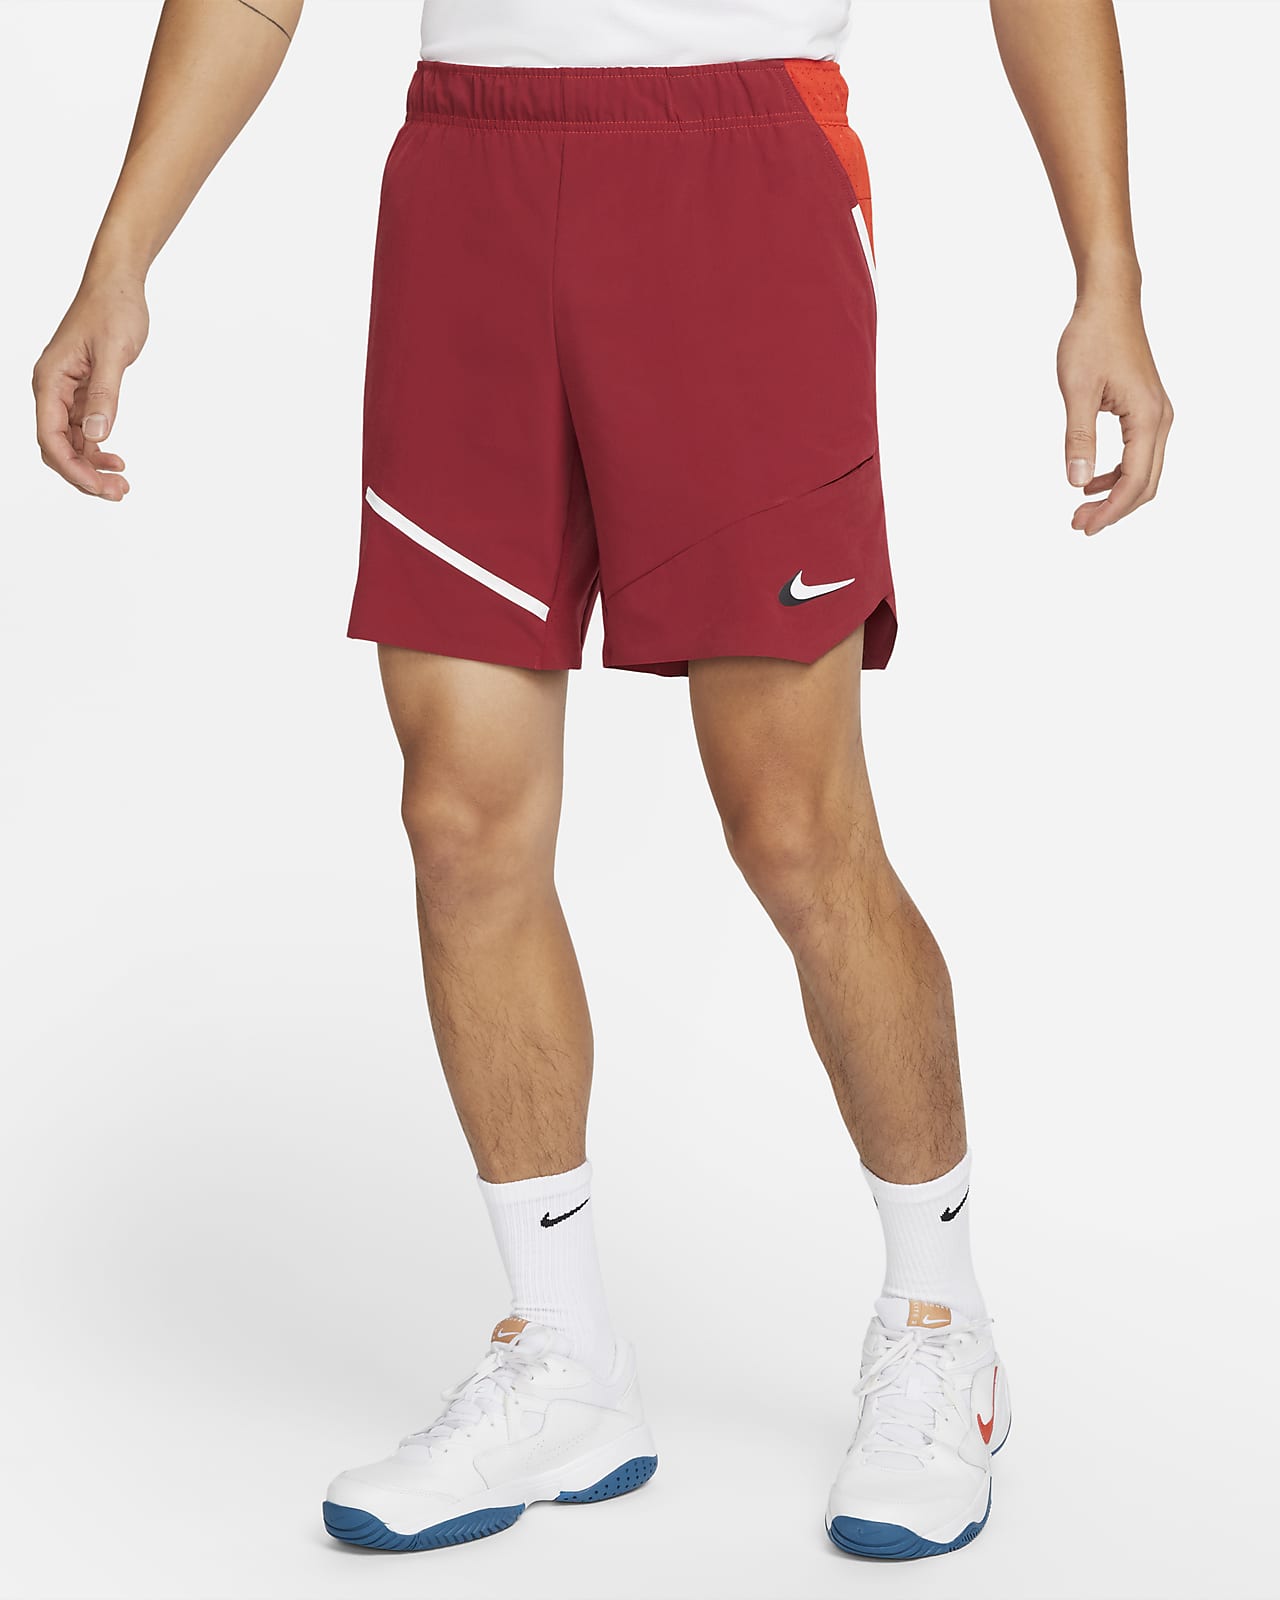 NikeCourt Slam Men's Tennis Shorts